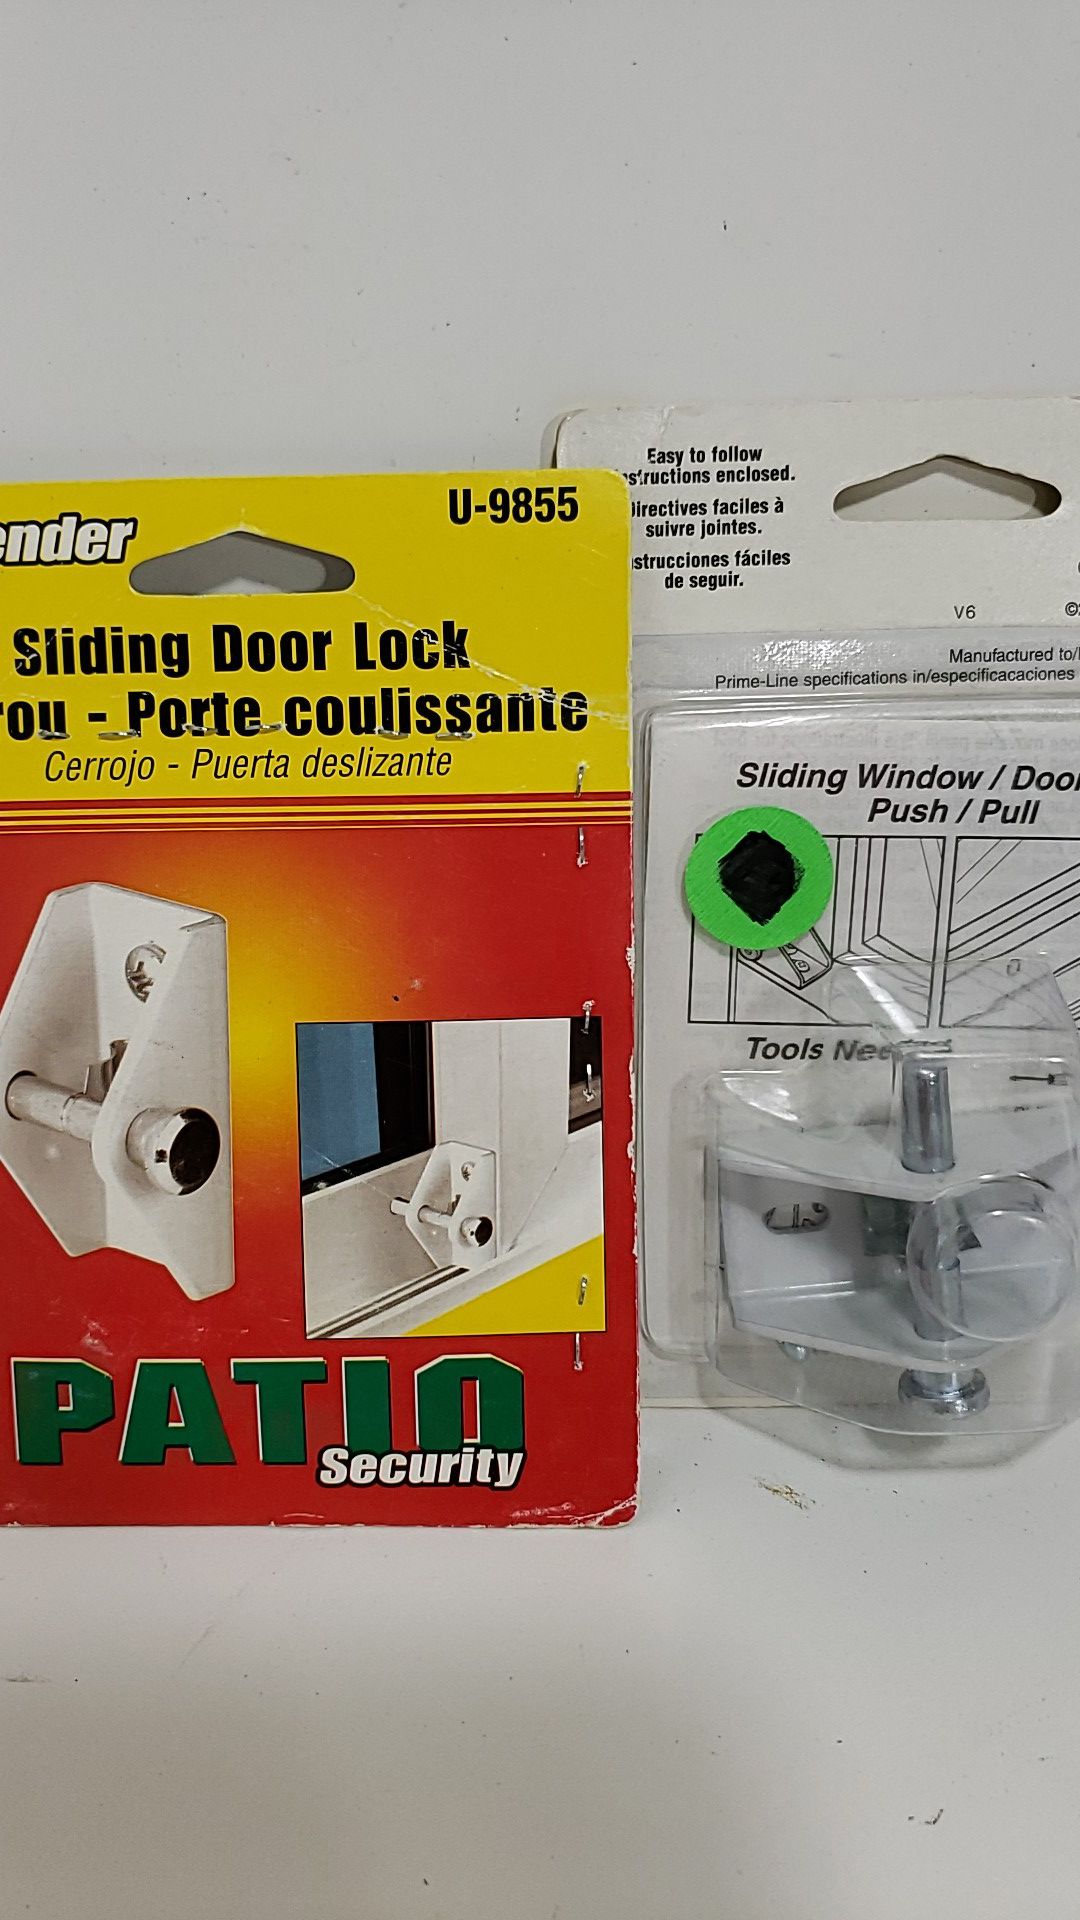 2 Defender U-9855 Sliding Door Lock pair white